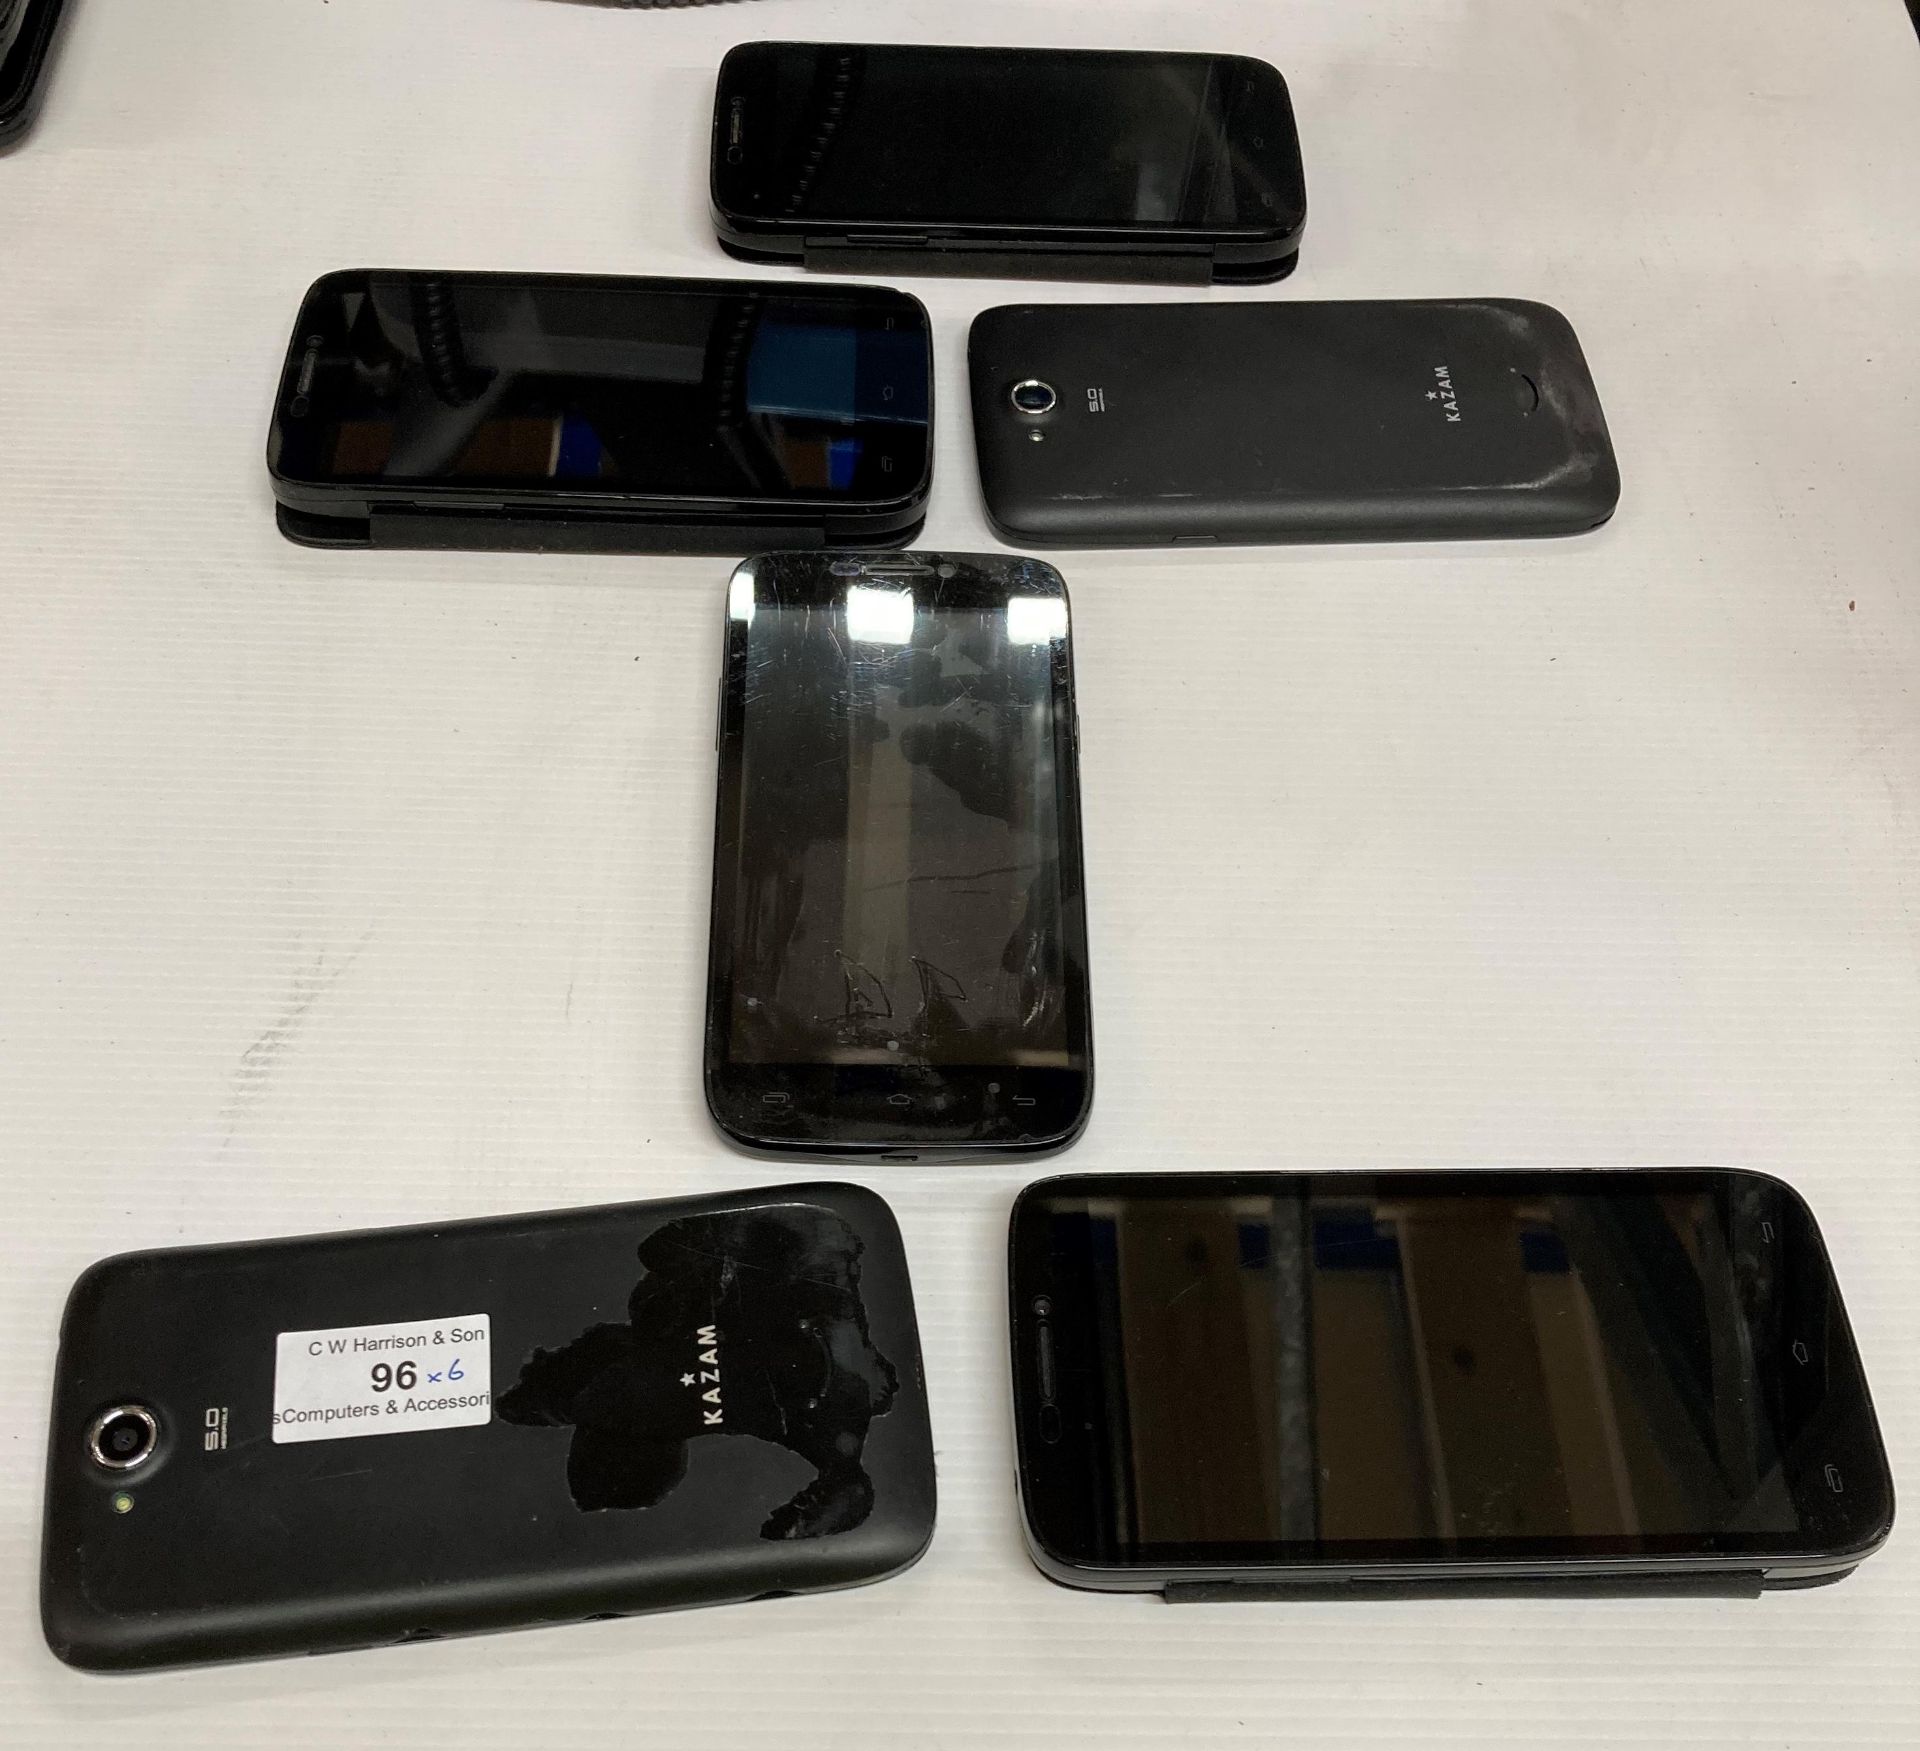 6 x Kazam 5MP Mobile Phones no chargers (Saleroom location: G11)